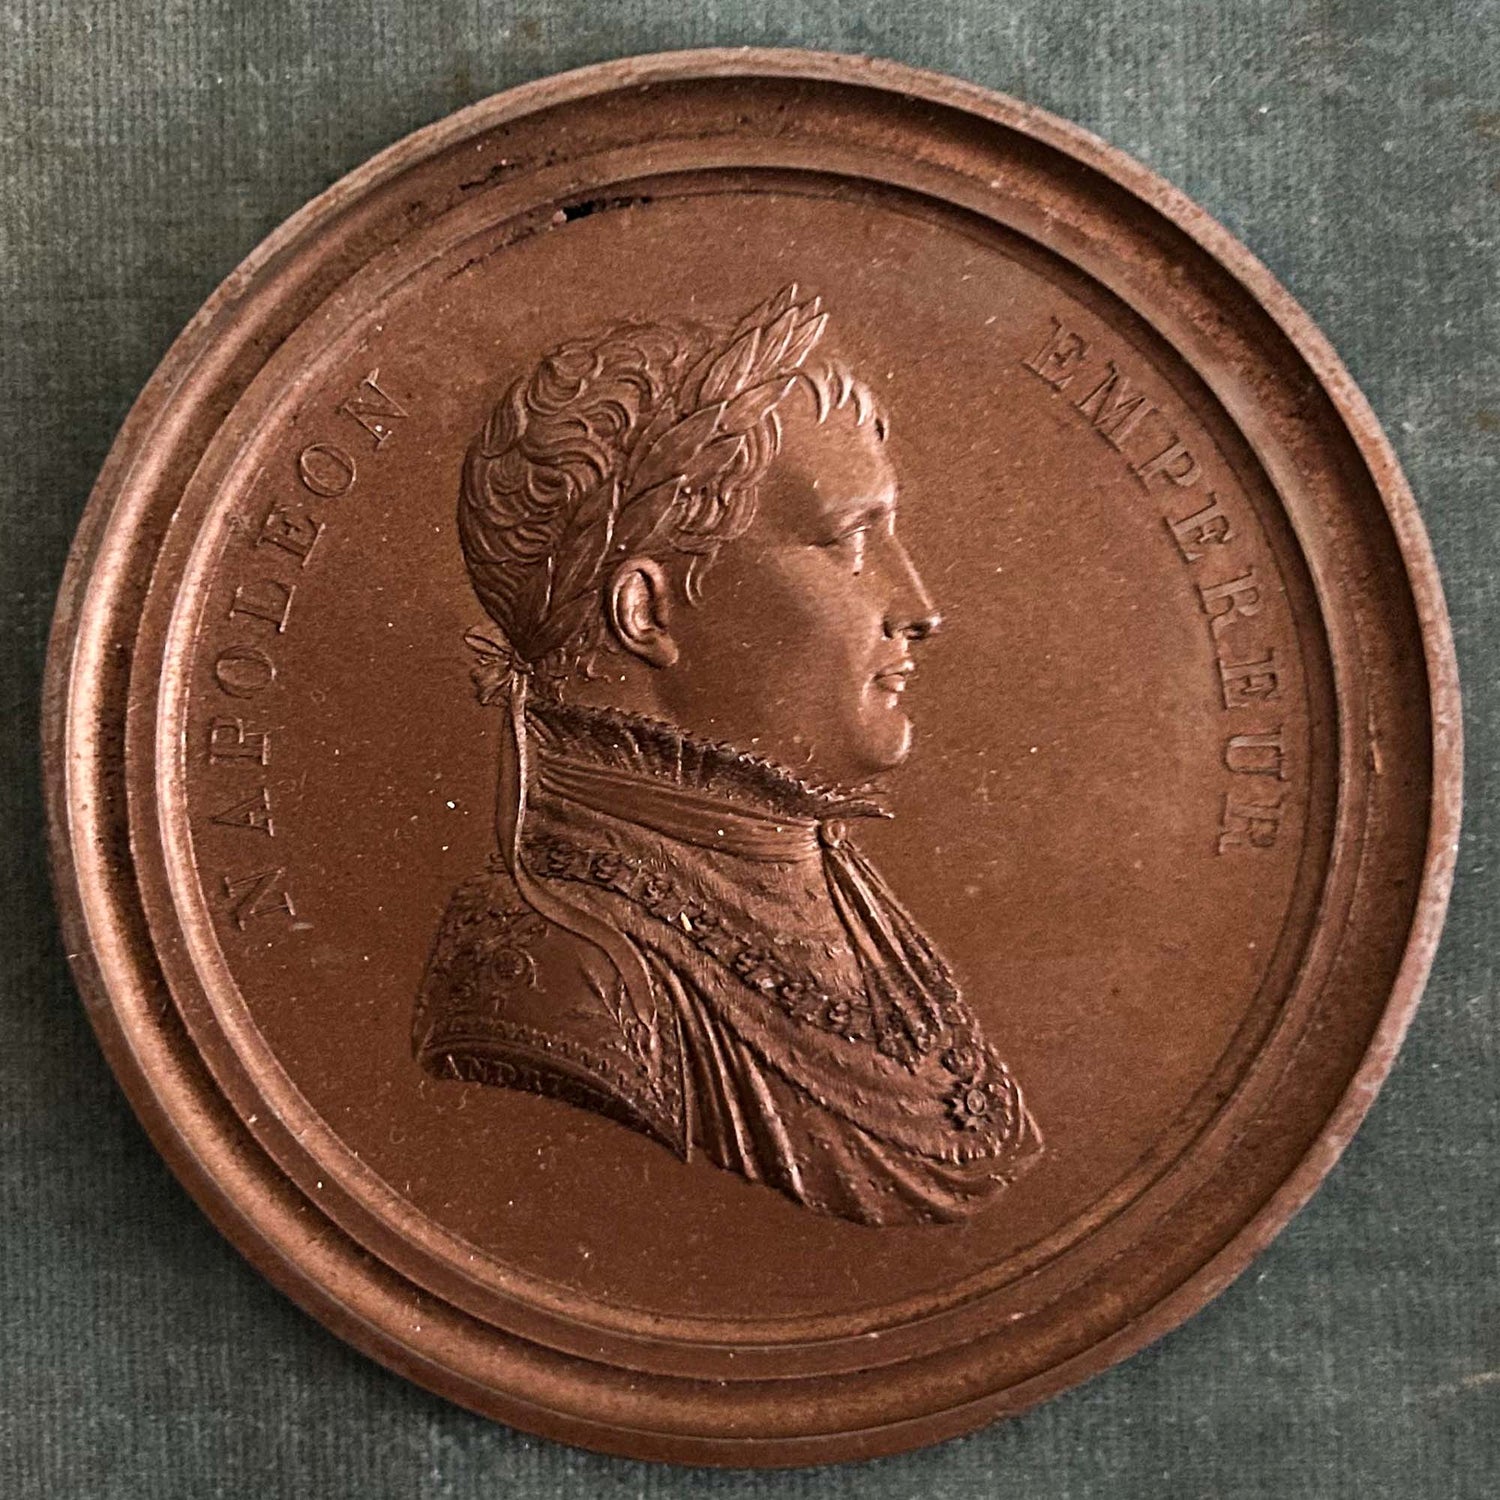 Napolean Medal Set Three